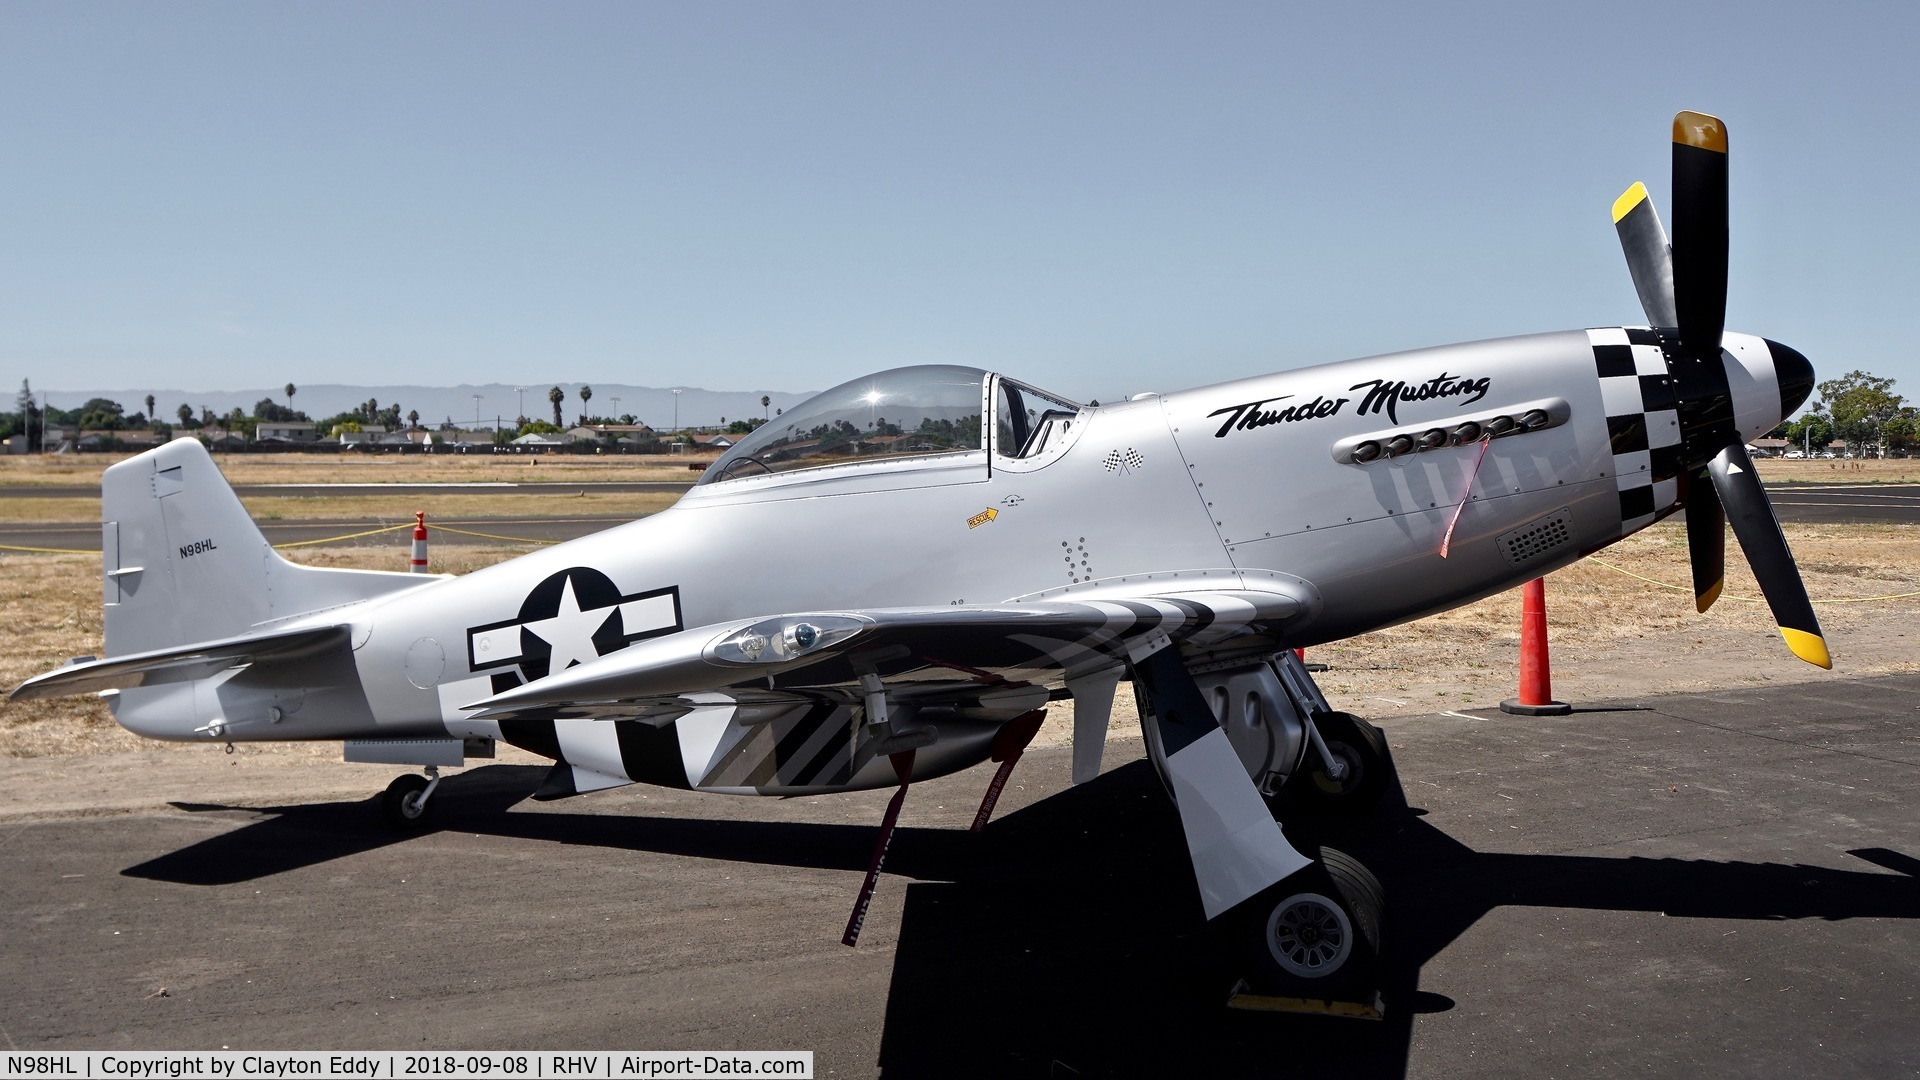 N98HL, 2004 Papa 51 Thunder Mustang C/N CITM009, Reid-Hillview Airport California 2018.